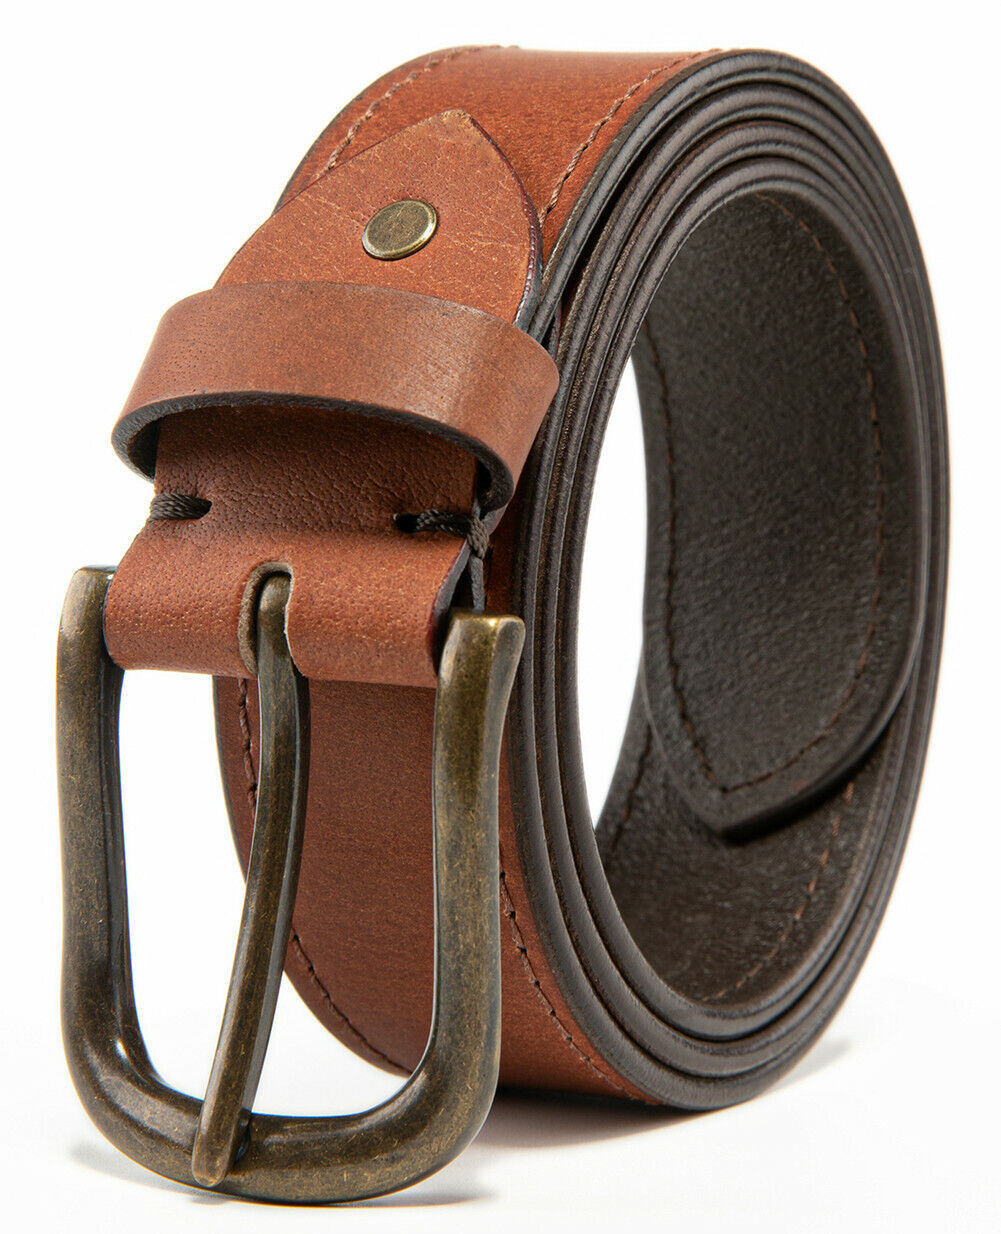 First Broom Skepticism Men's Top Grain Leather Belts Casual Jeans Solid Belts for Men 1.5inch  Width | eBay